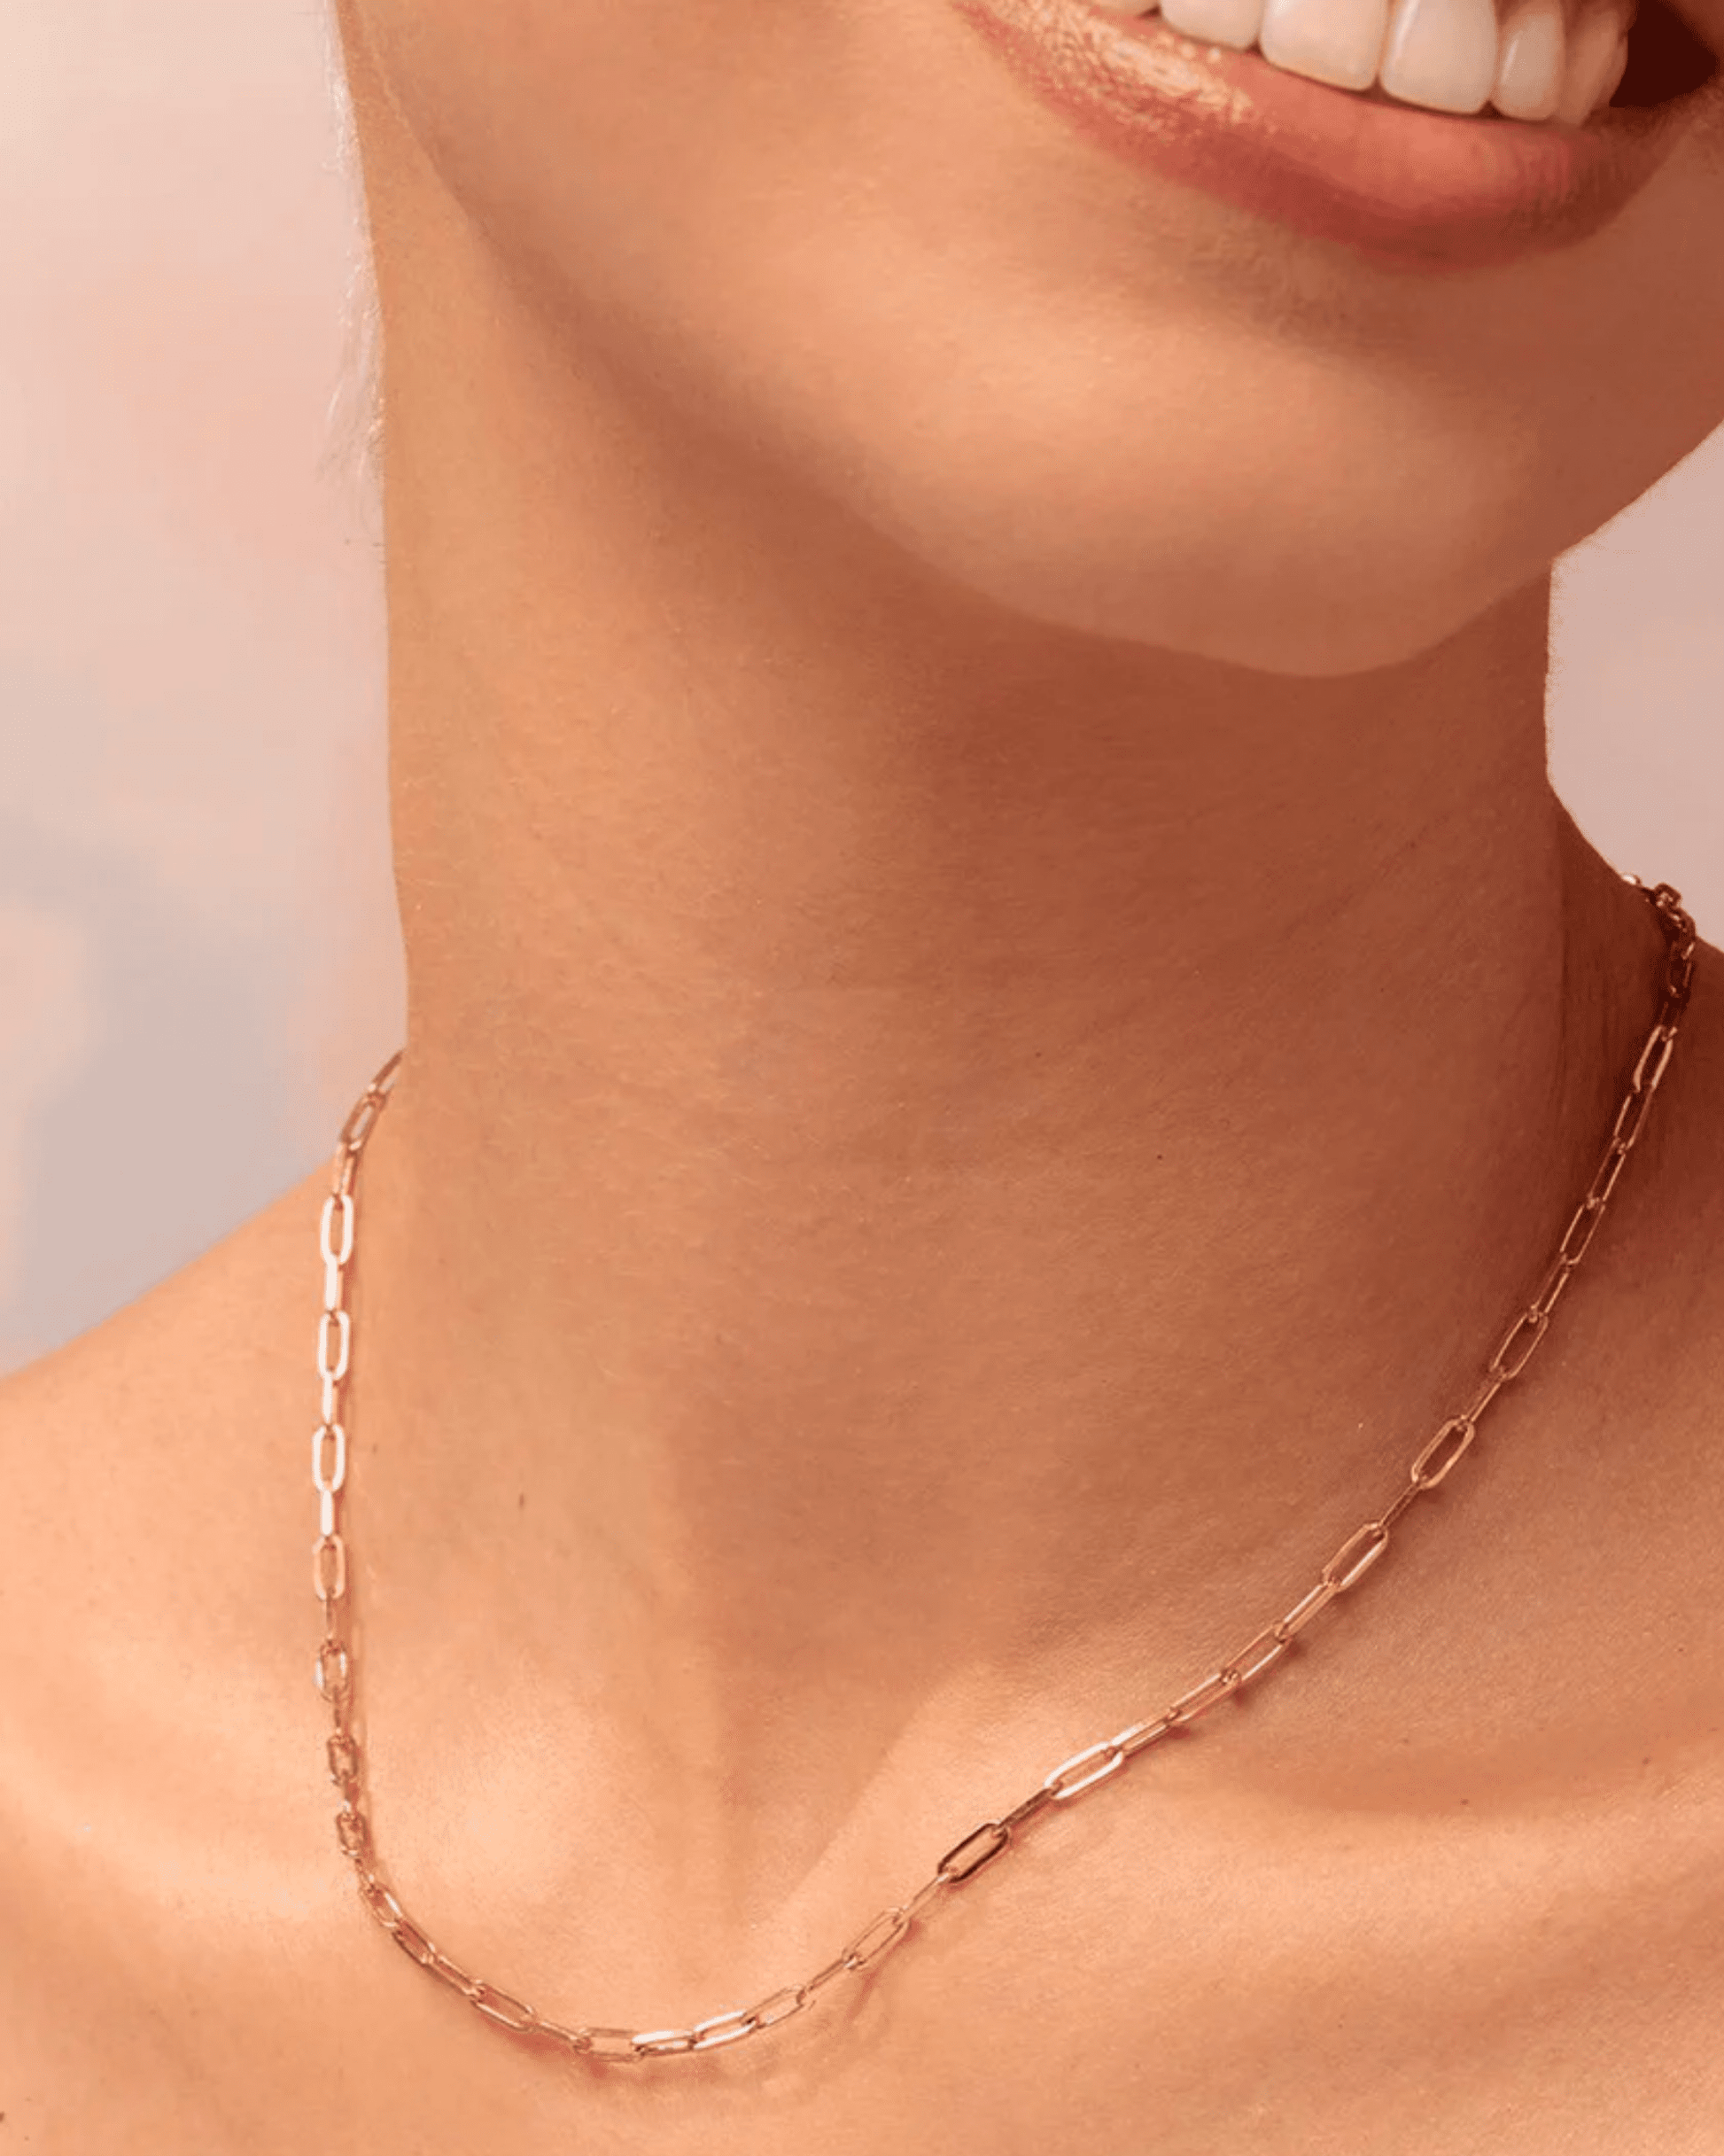 Set of Round Solitaire Diamond & Links Chain Necklaces - 18K Rose Vermeil Necklaces magal-dev 